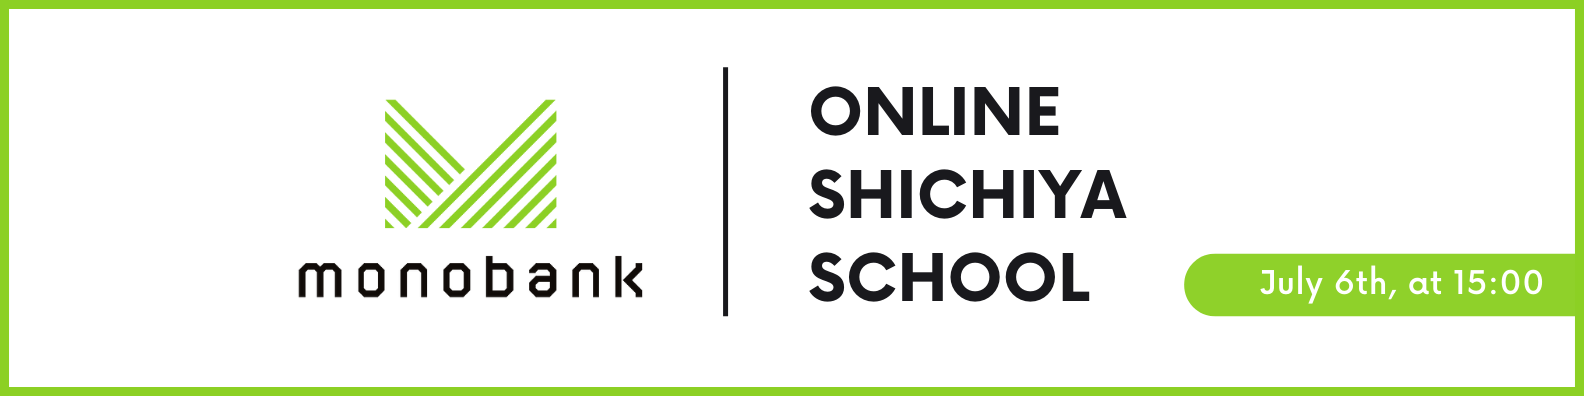 monobank news｜7月 オンライン質屋学校開催決定のおしらせ